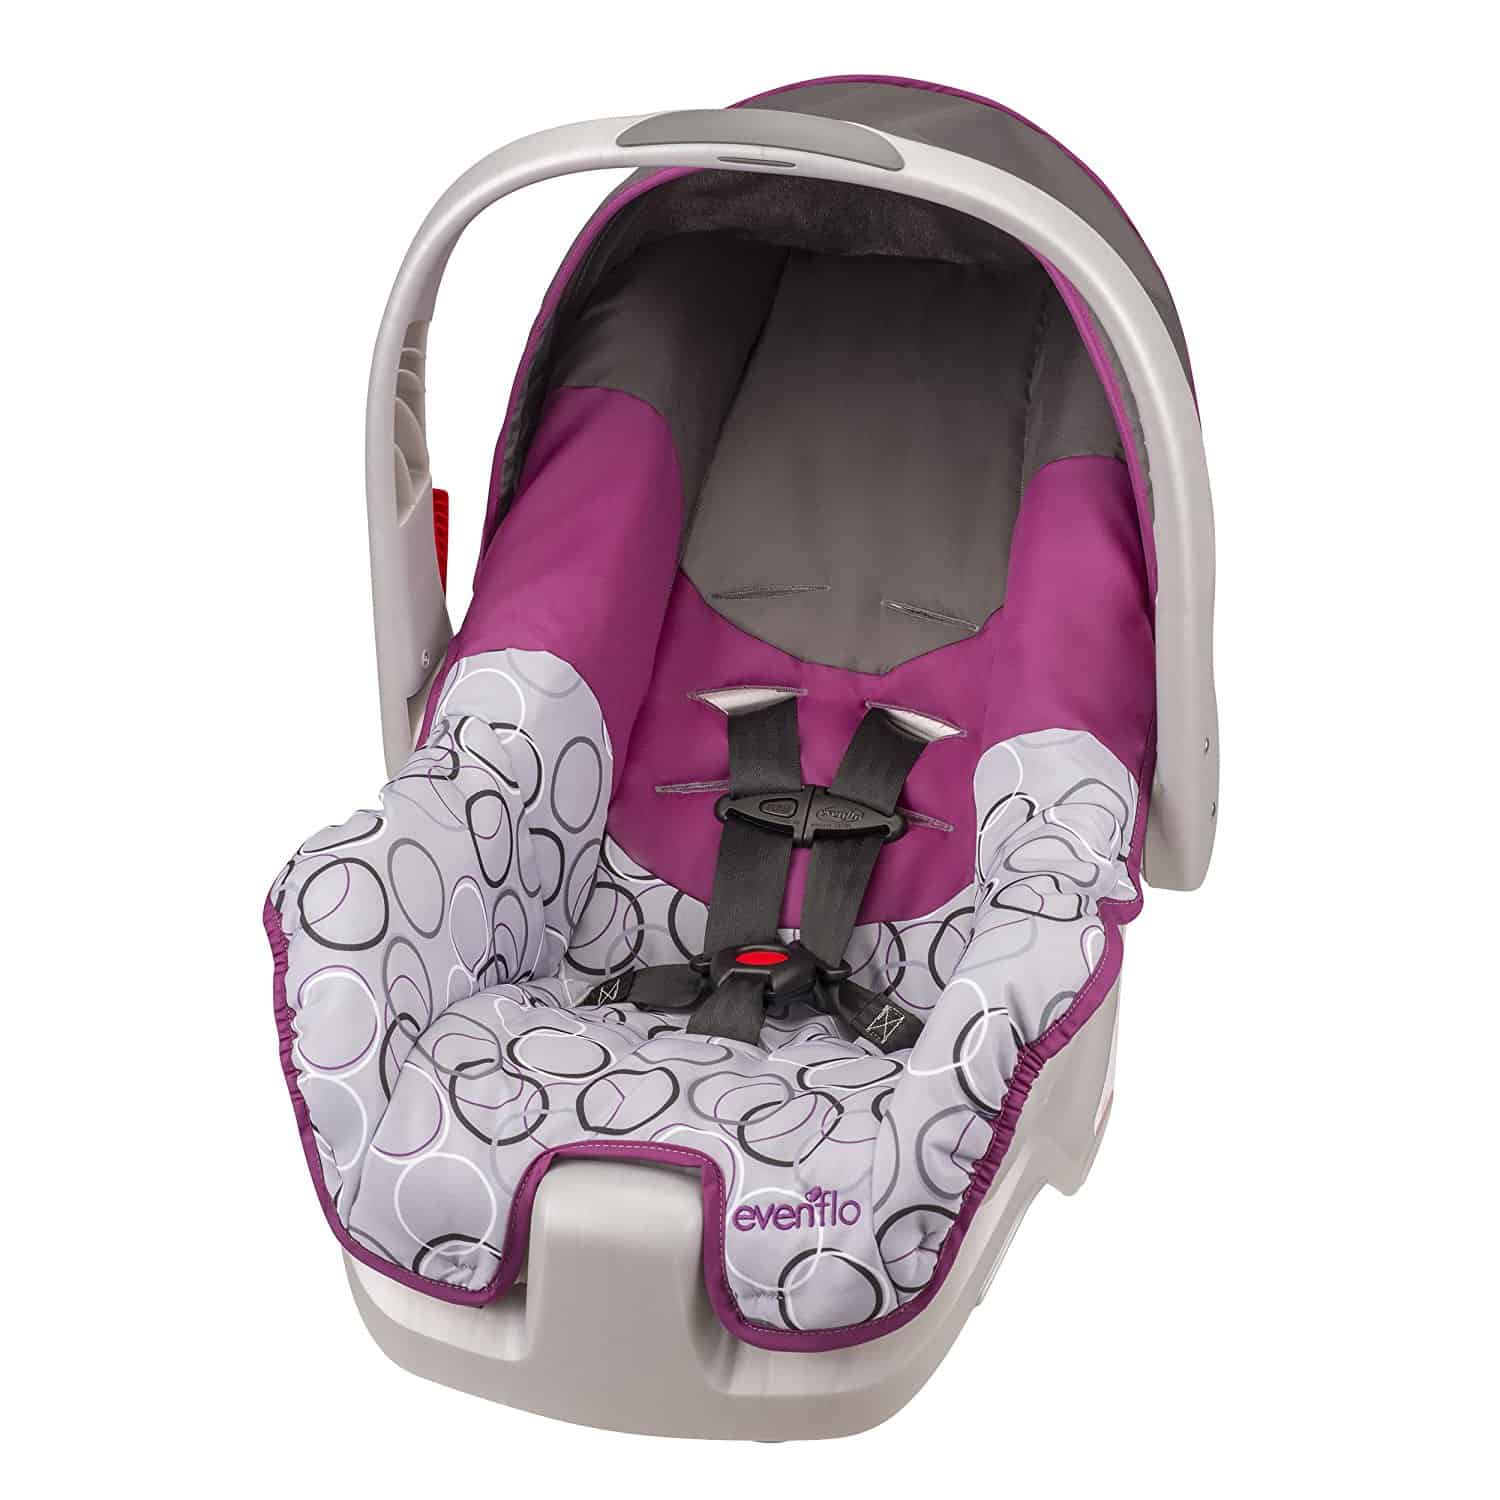 Infant Car Seat Review Evenflo Nurture Baby Bargains - How To Install Evenflo Nurture Car Seat Base